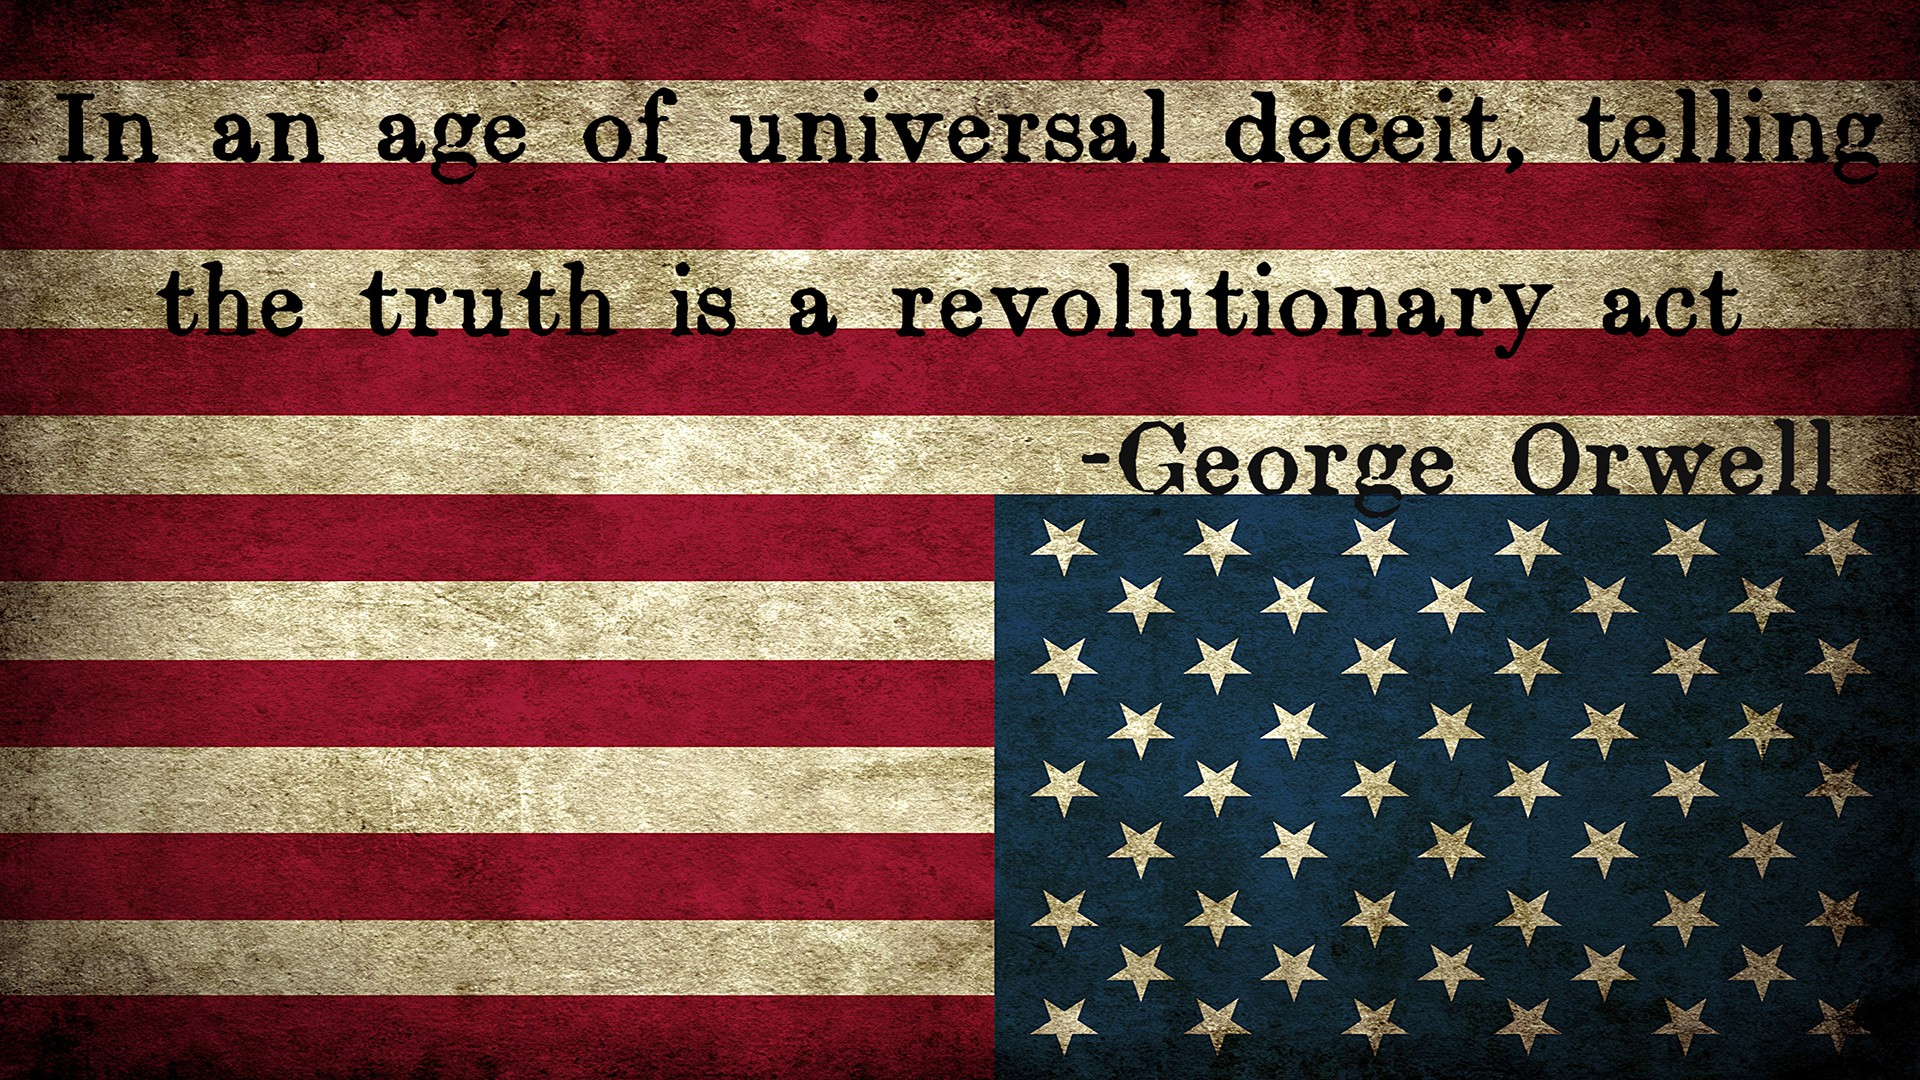 цитаты, революция, 1984, флаги, США, Джордж Оруэлл - обои на рабочий стол